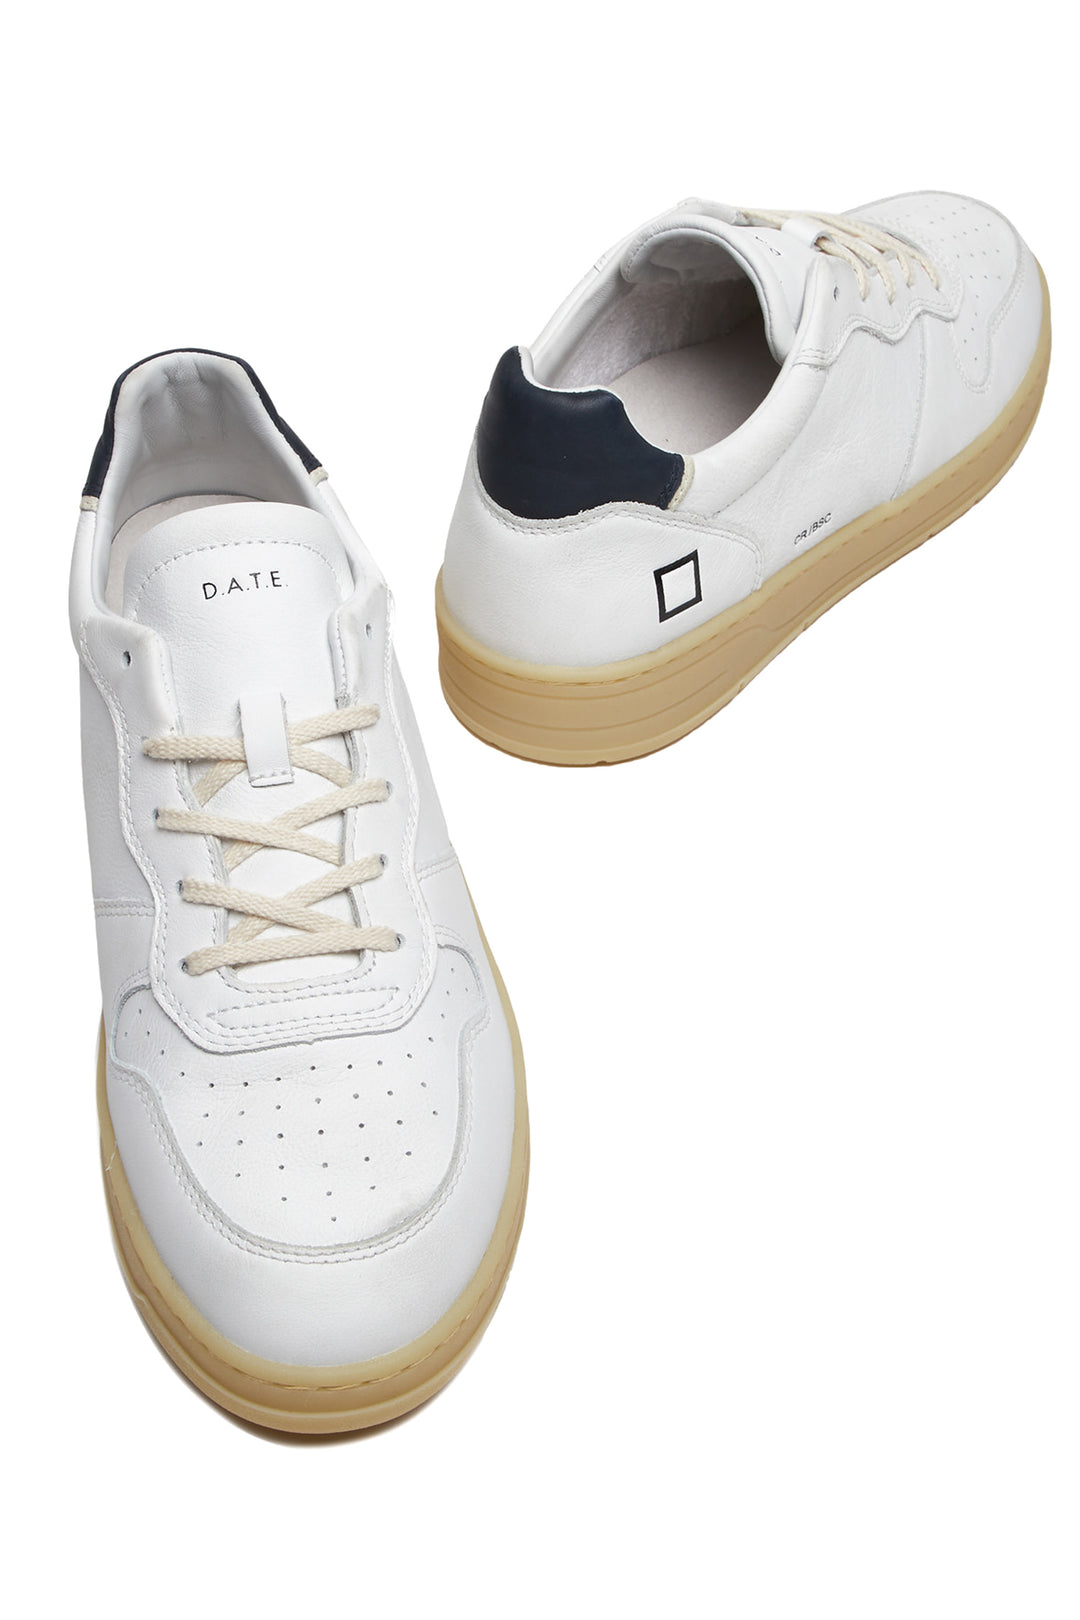 DATE Sneaker Court Basic White-Blue - Mancinelli 1954